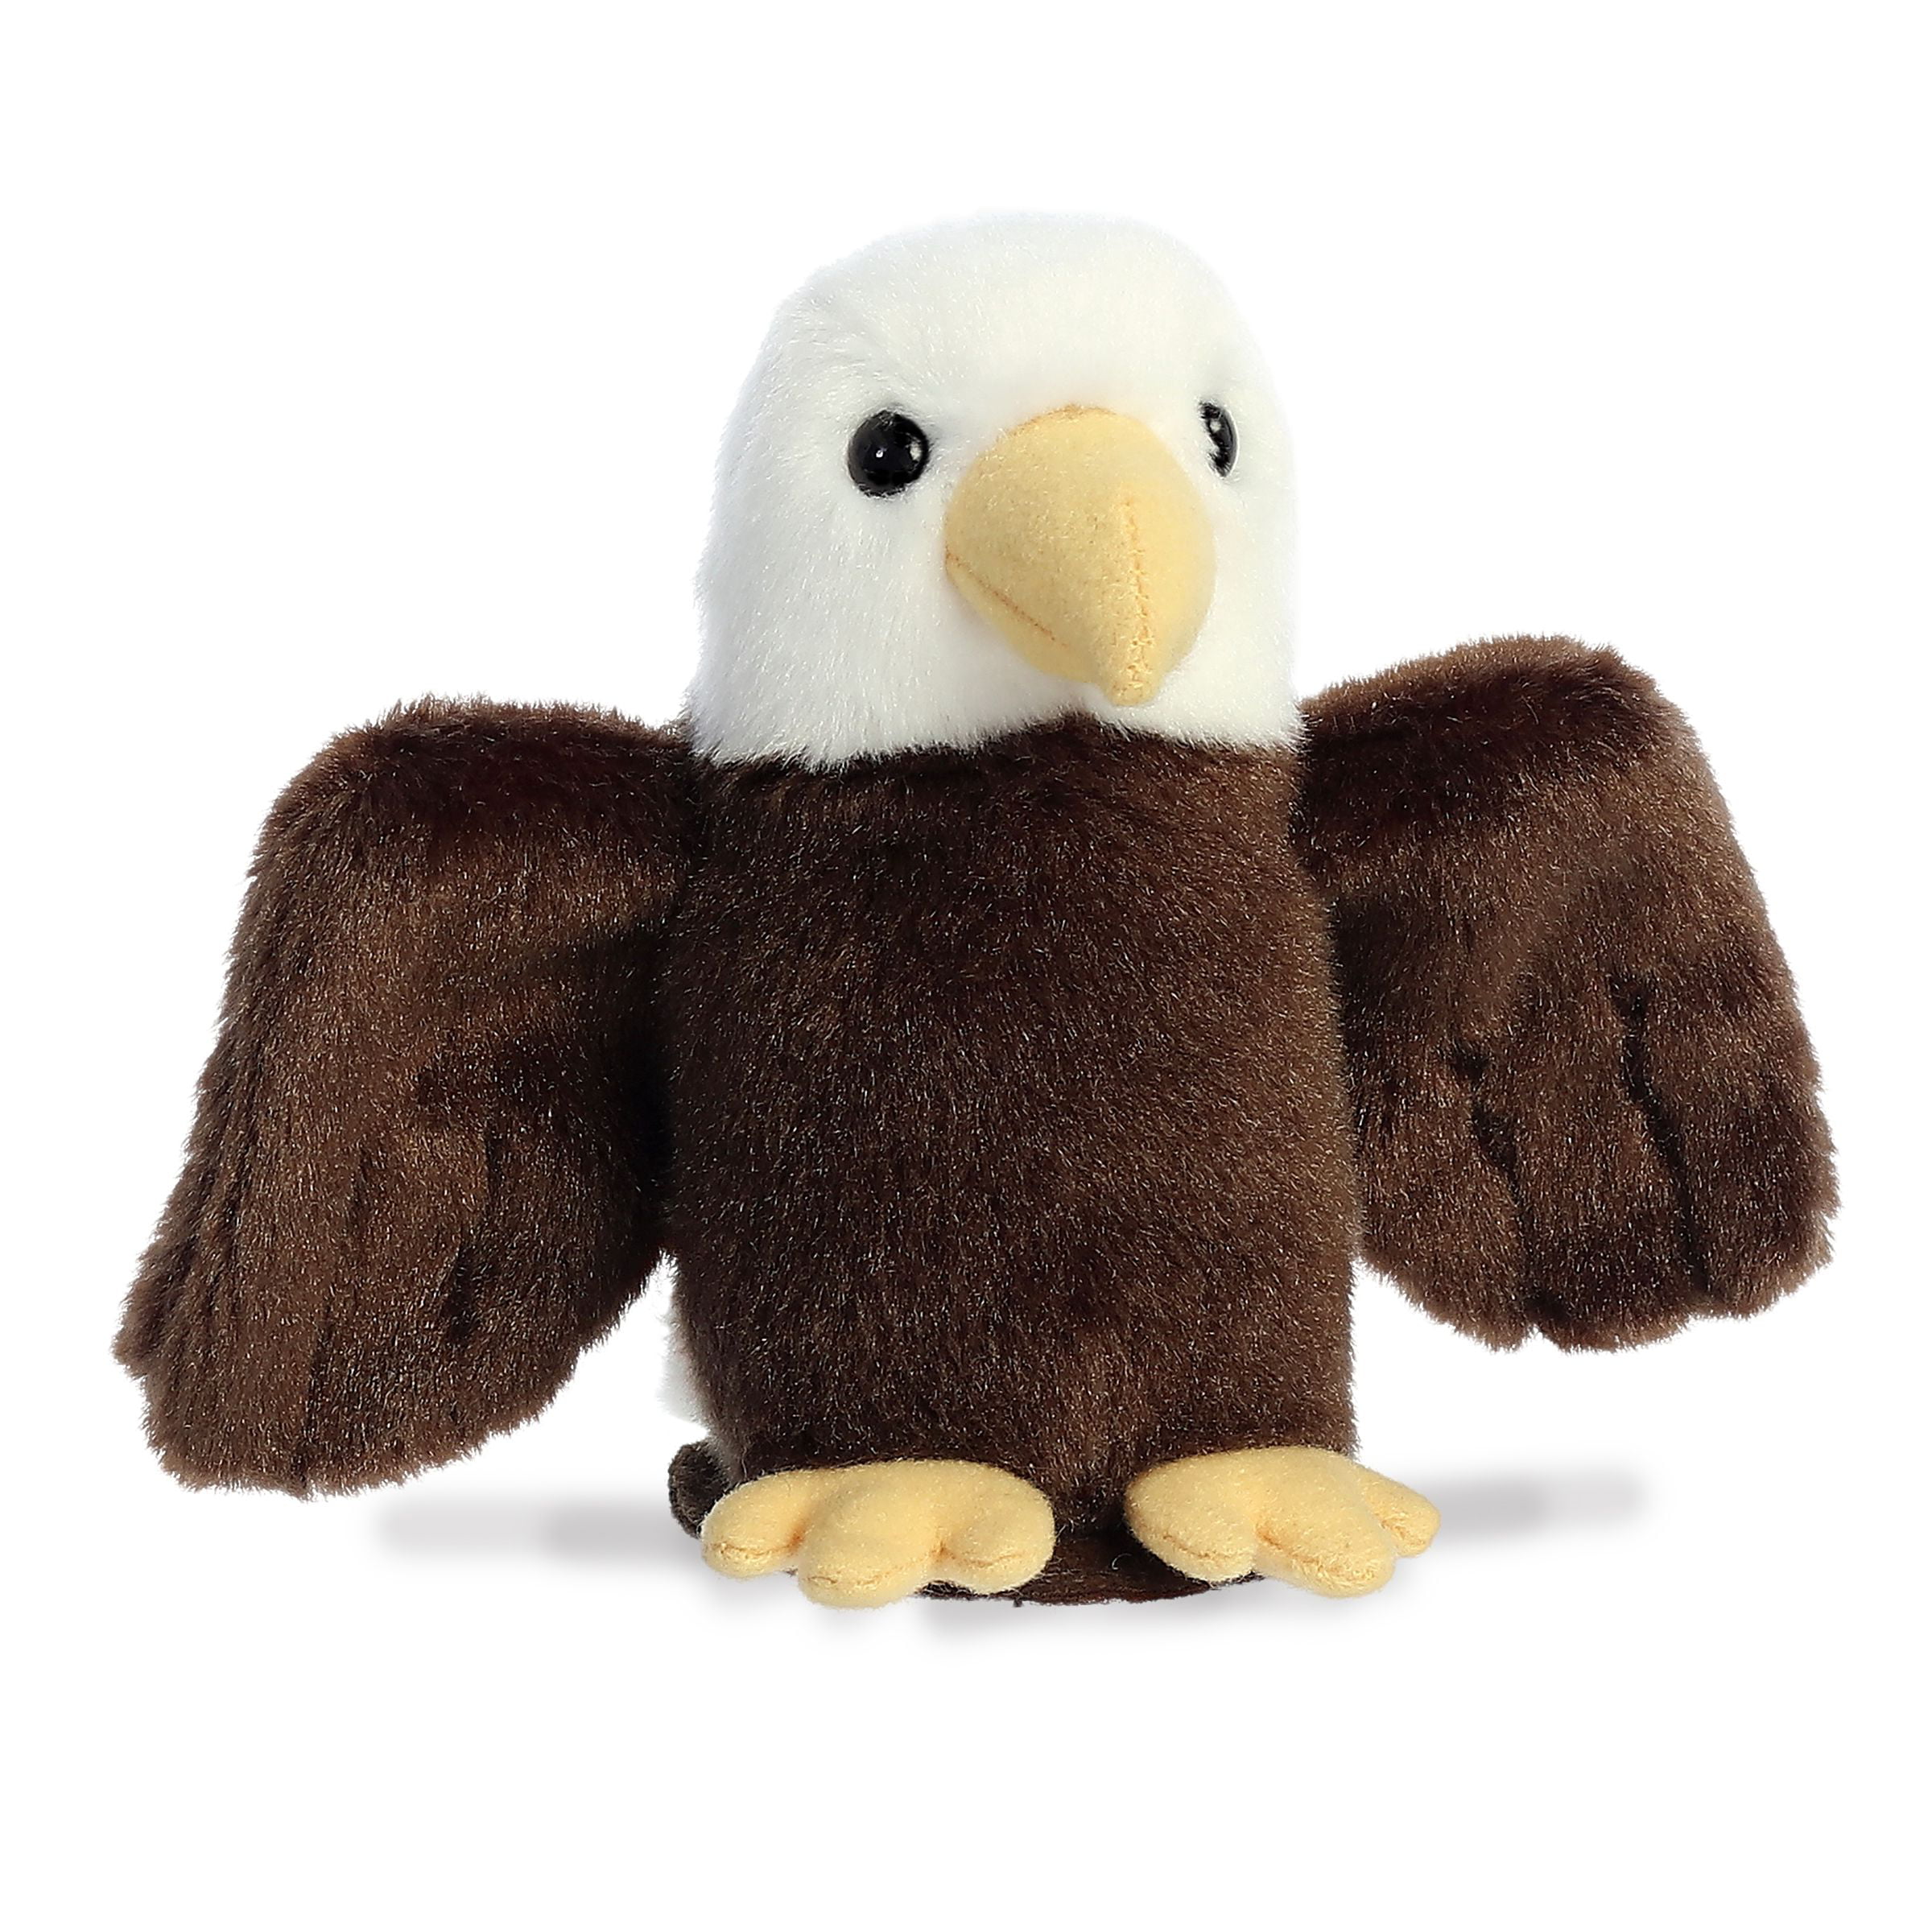 Infant Plush Eagle Costume, Size: 26 x 40 x 1.5, Brown